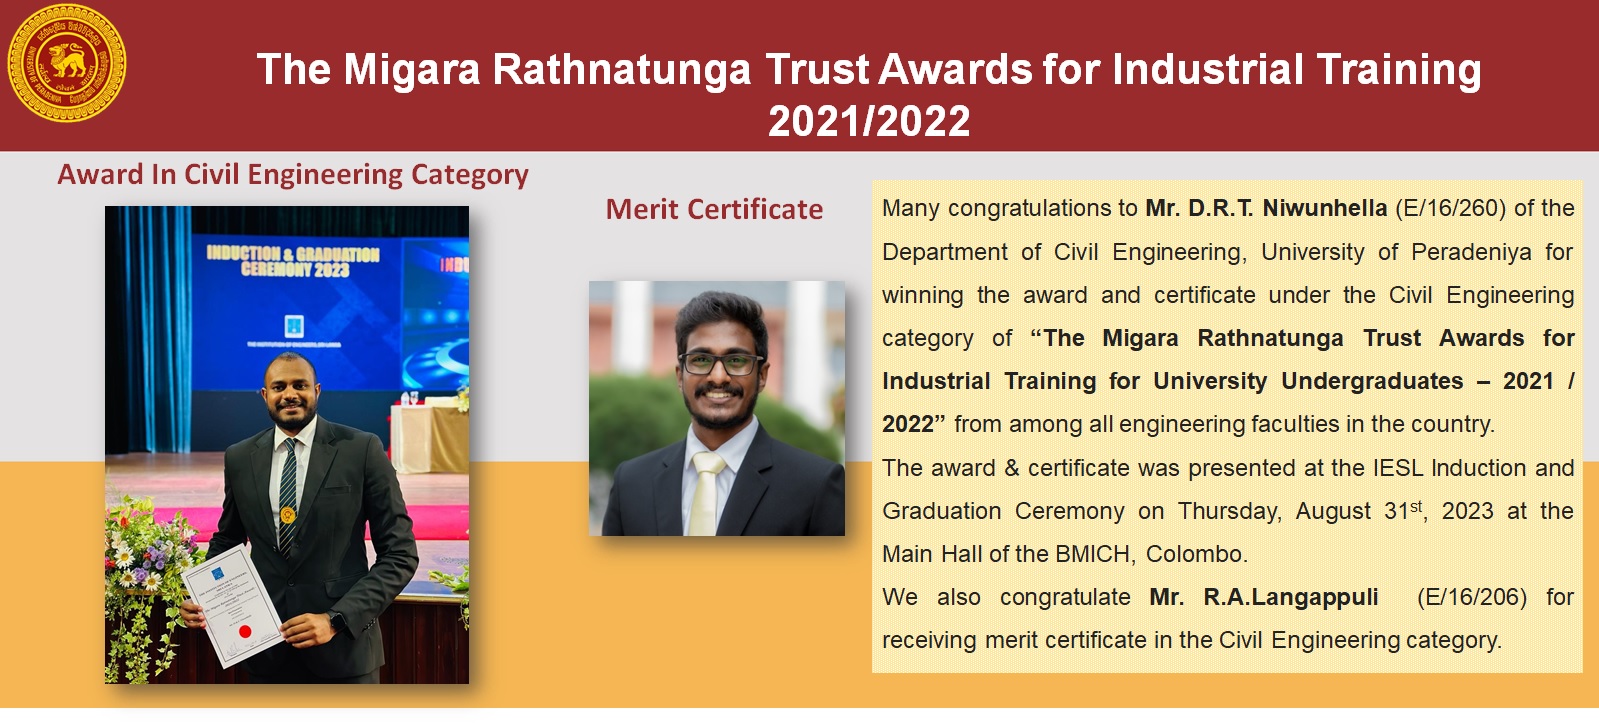 The Migara Rathnatunga Trust Awards for Industrial Training 2021/2022